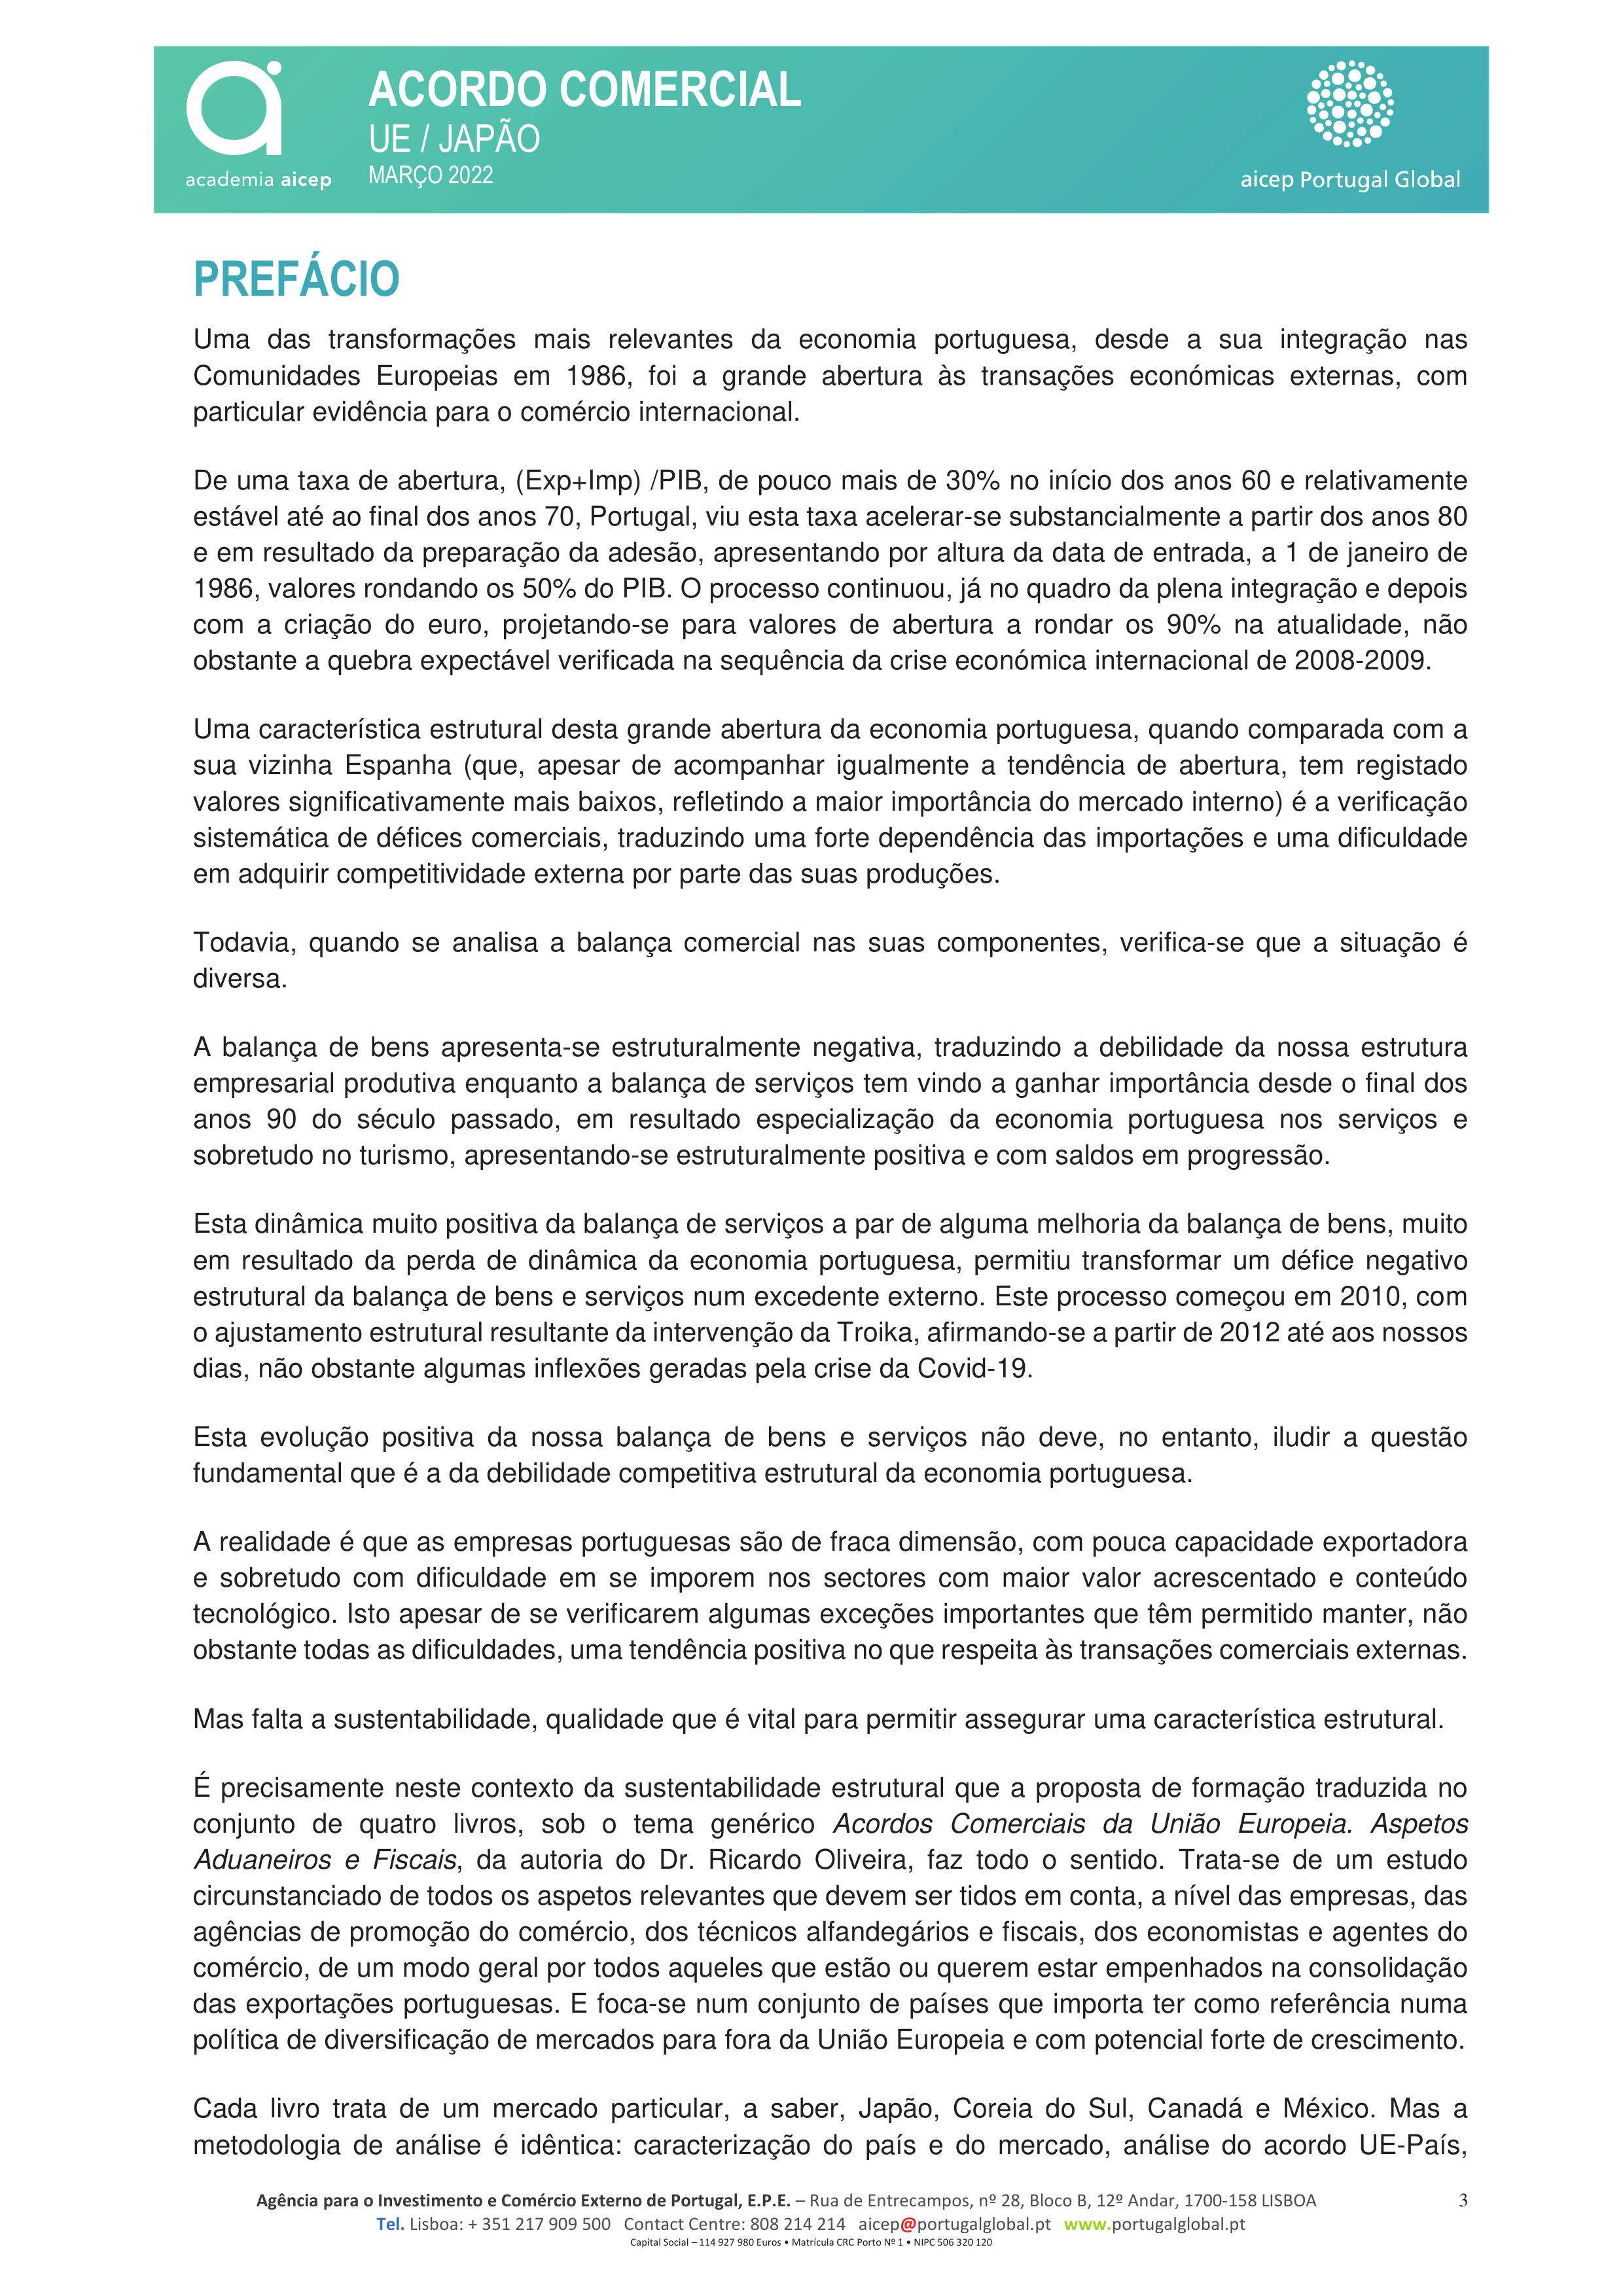  Manual - Acordo Comercial UE Japao -1.jpg